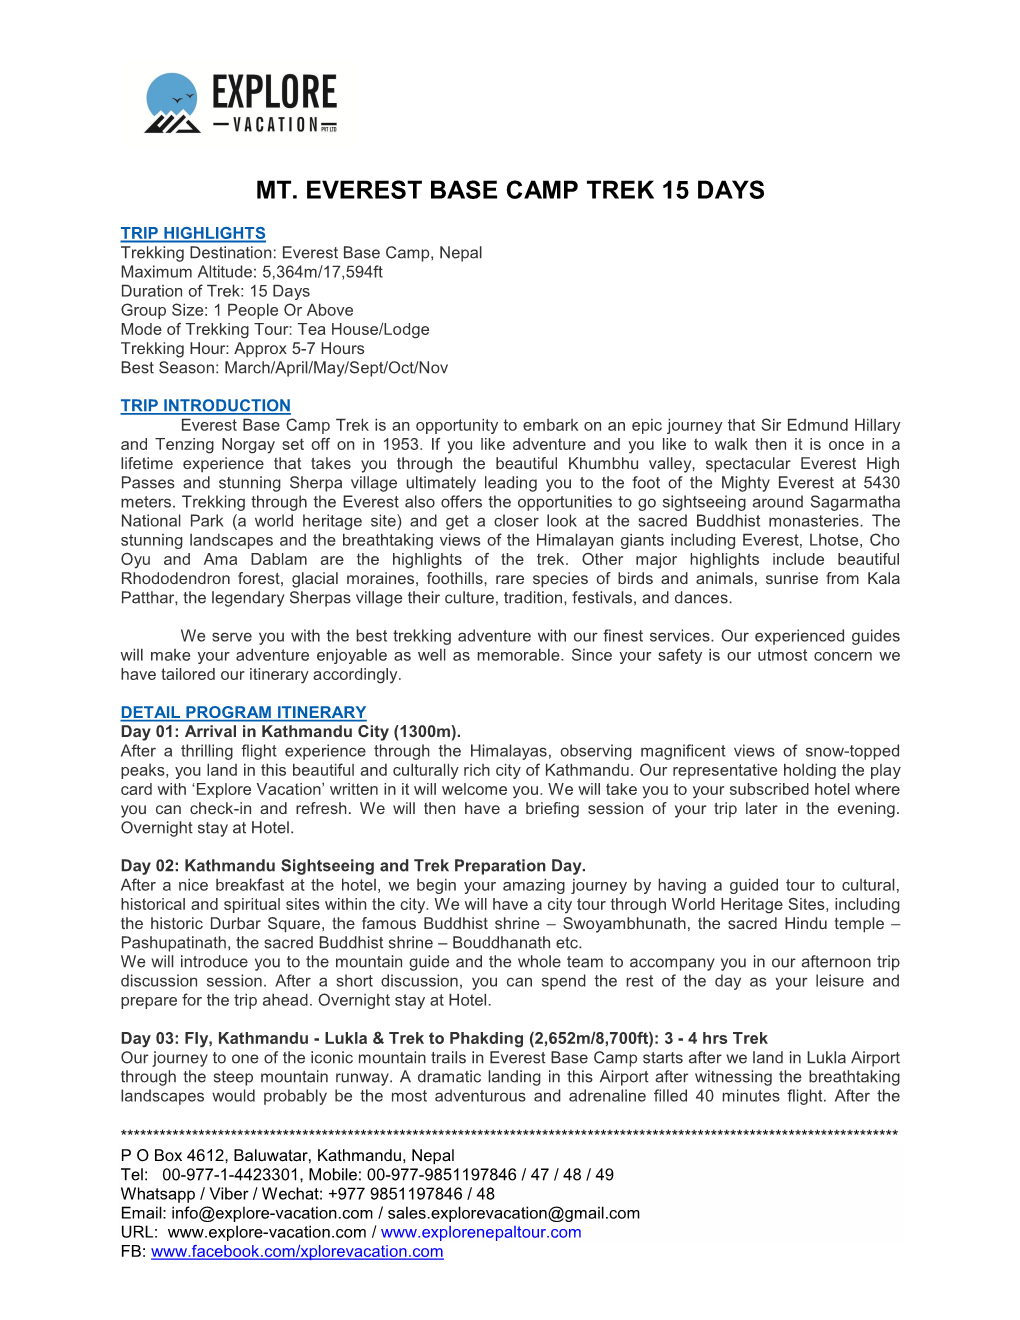 Mt. Everest Base Camp Trek 15 Days